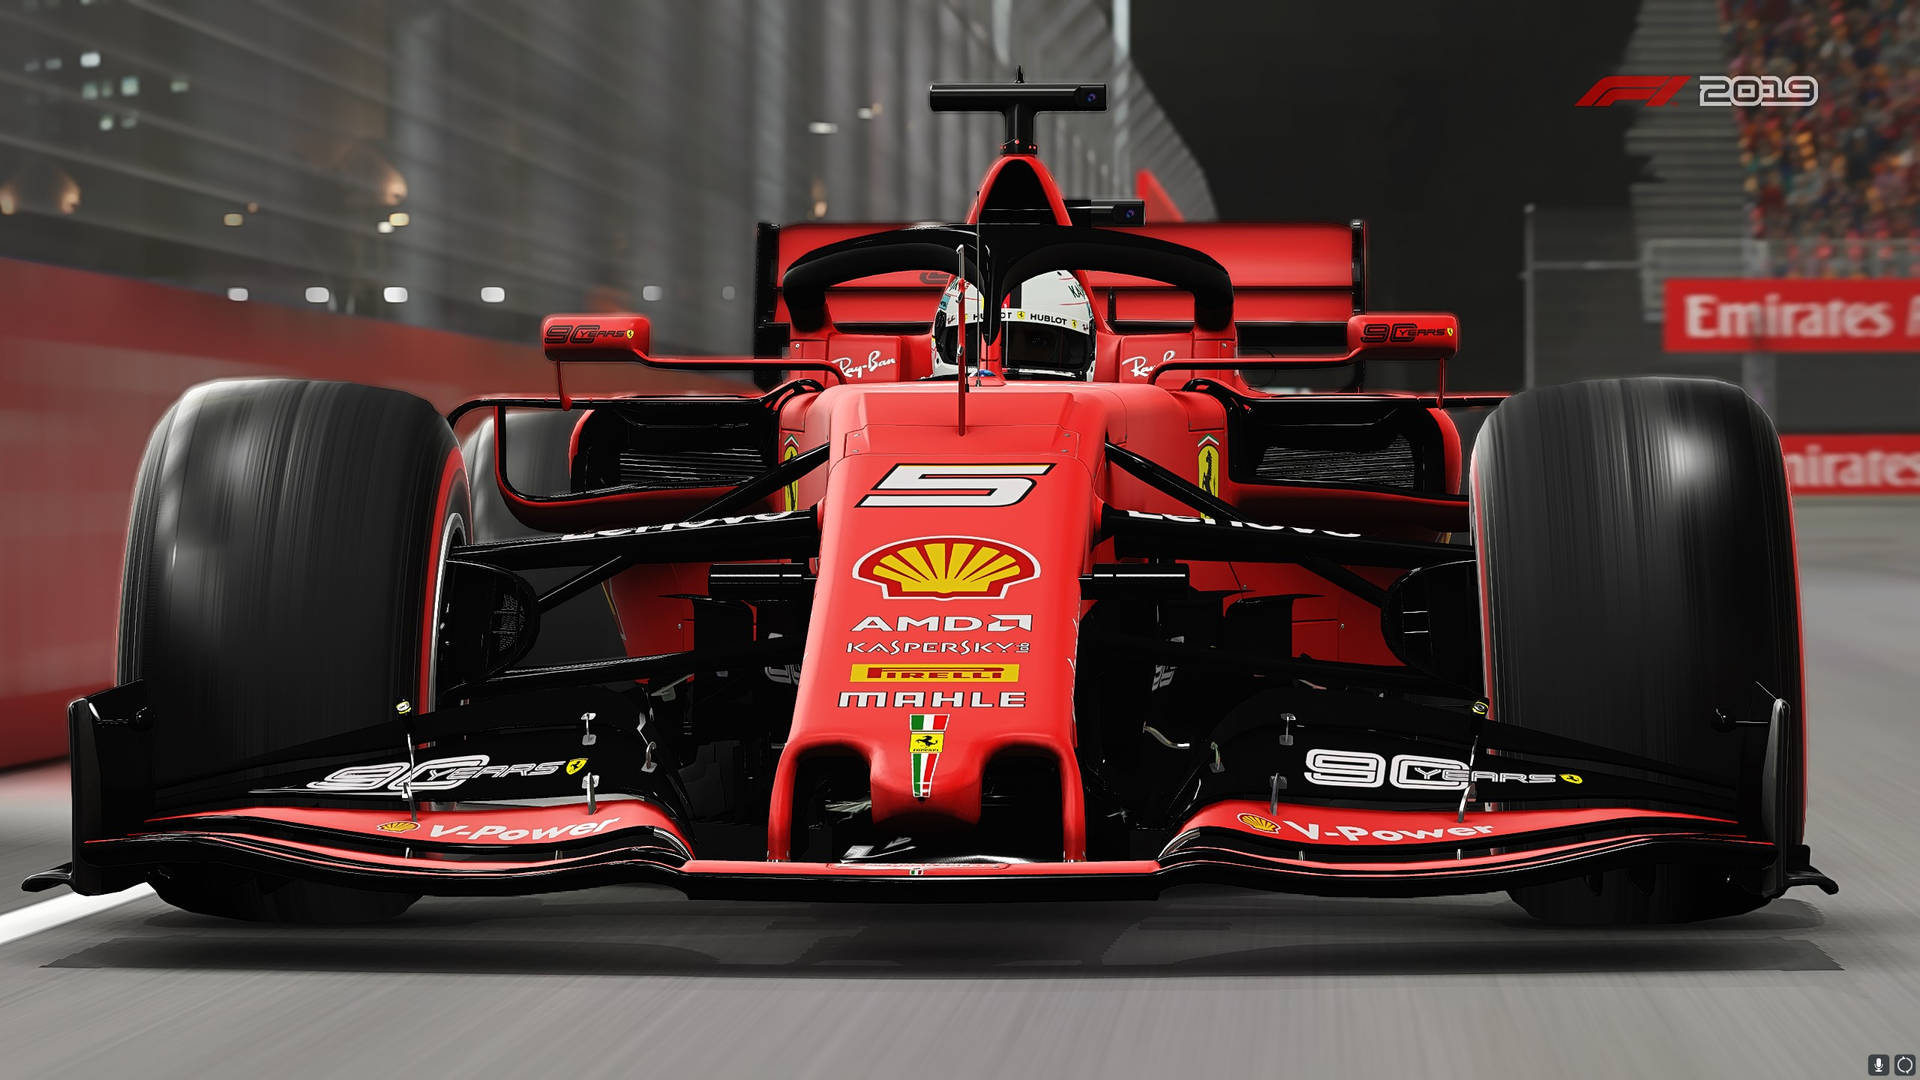 Vettel's#5 Auto In Der Formel 1 2019 Wallpaper